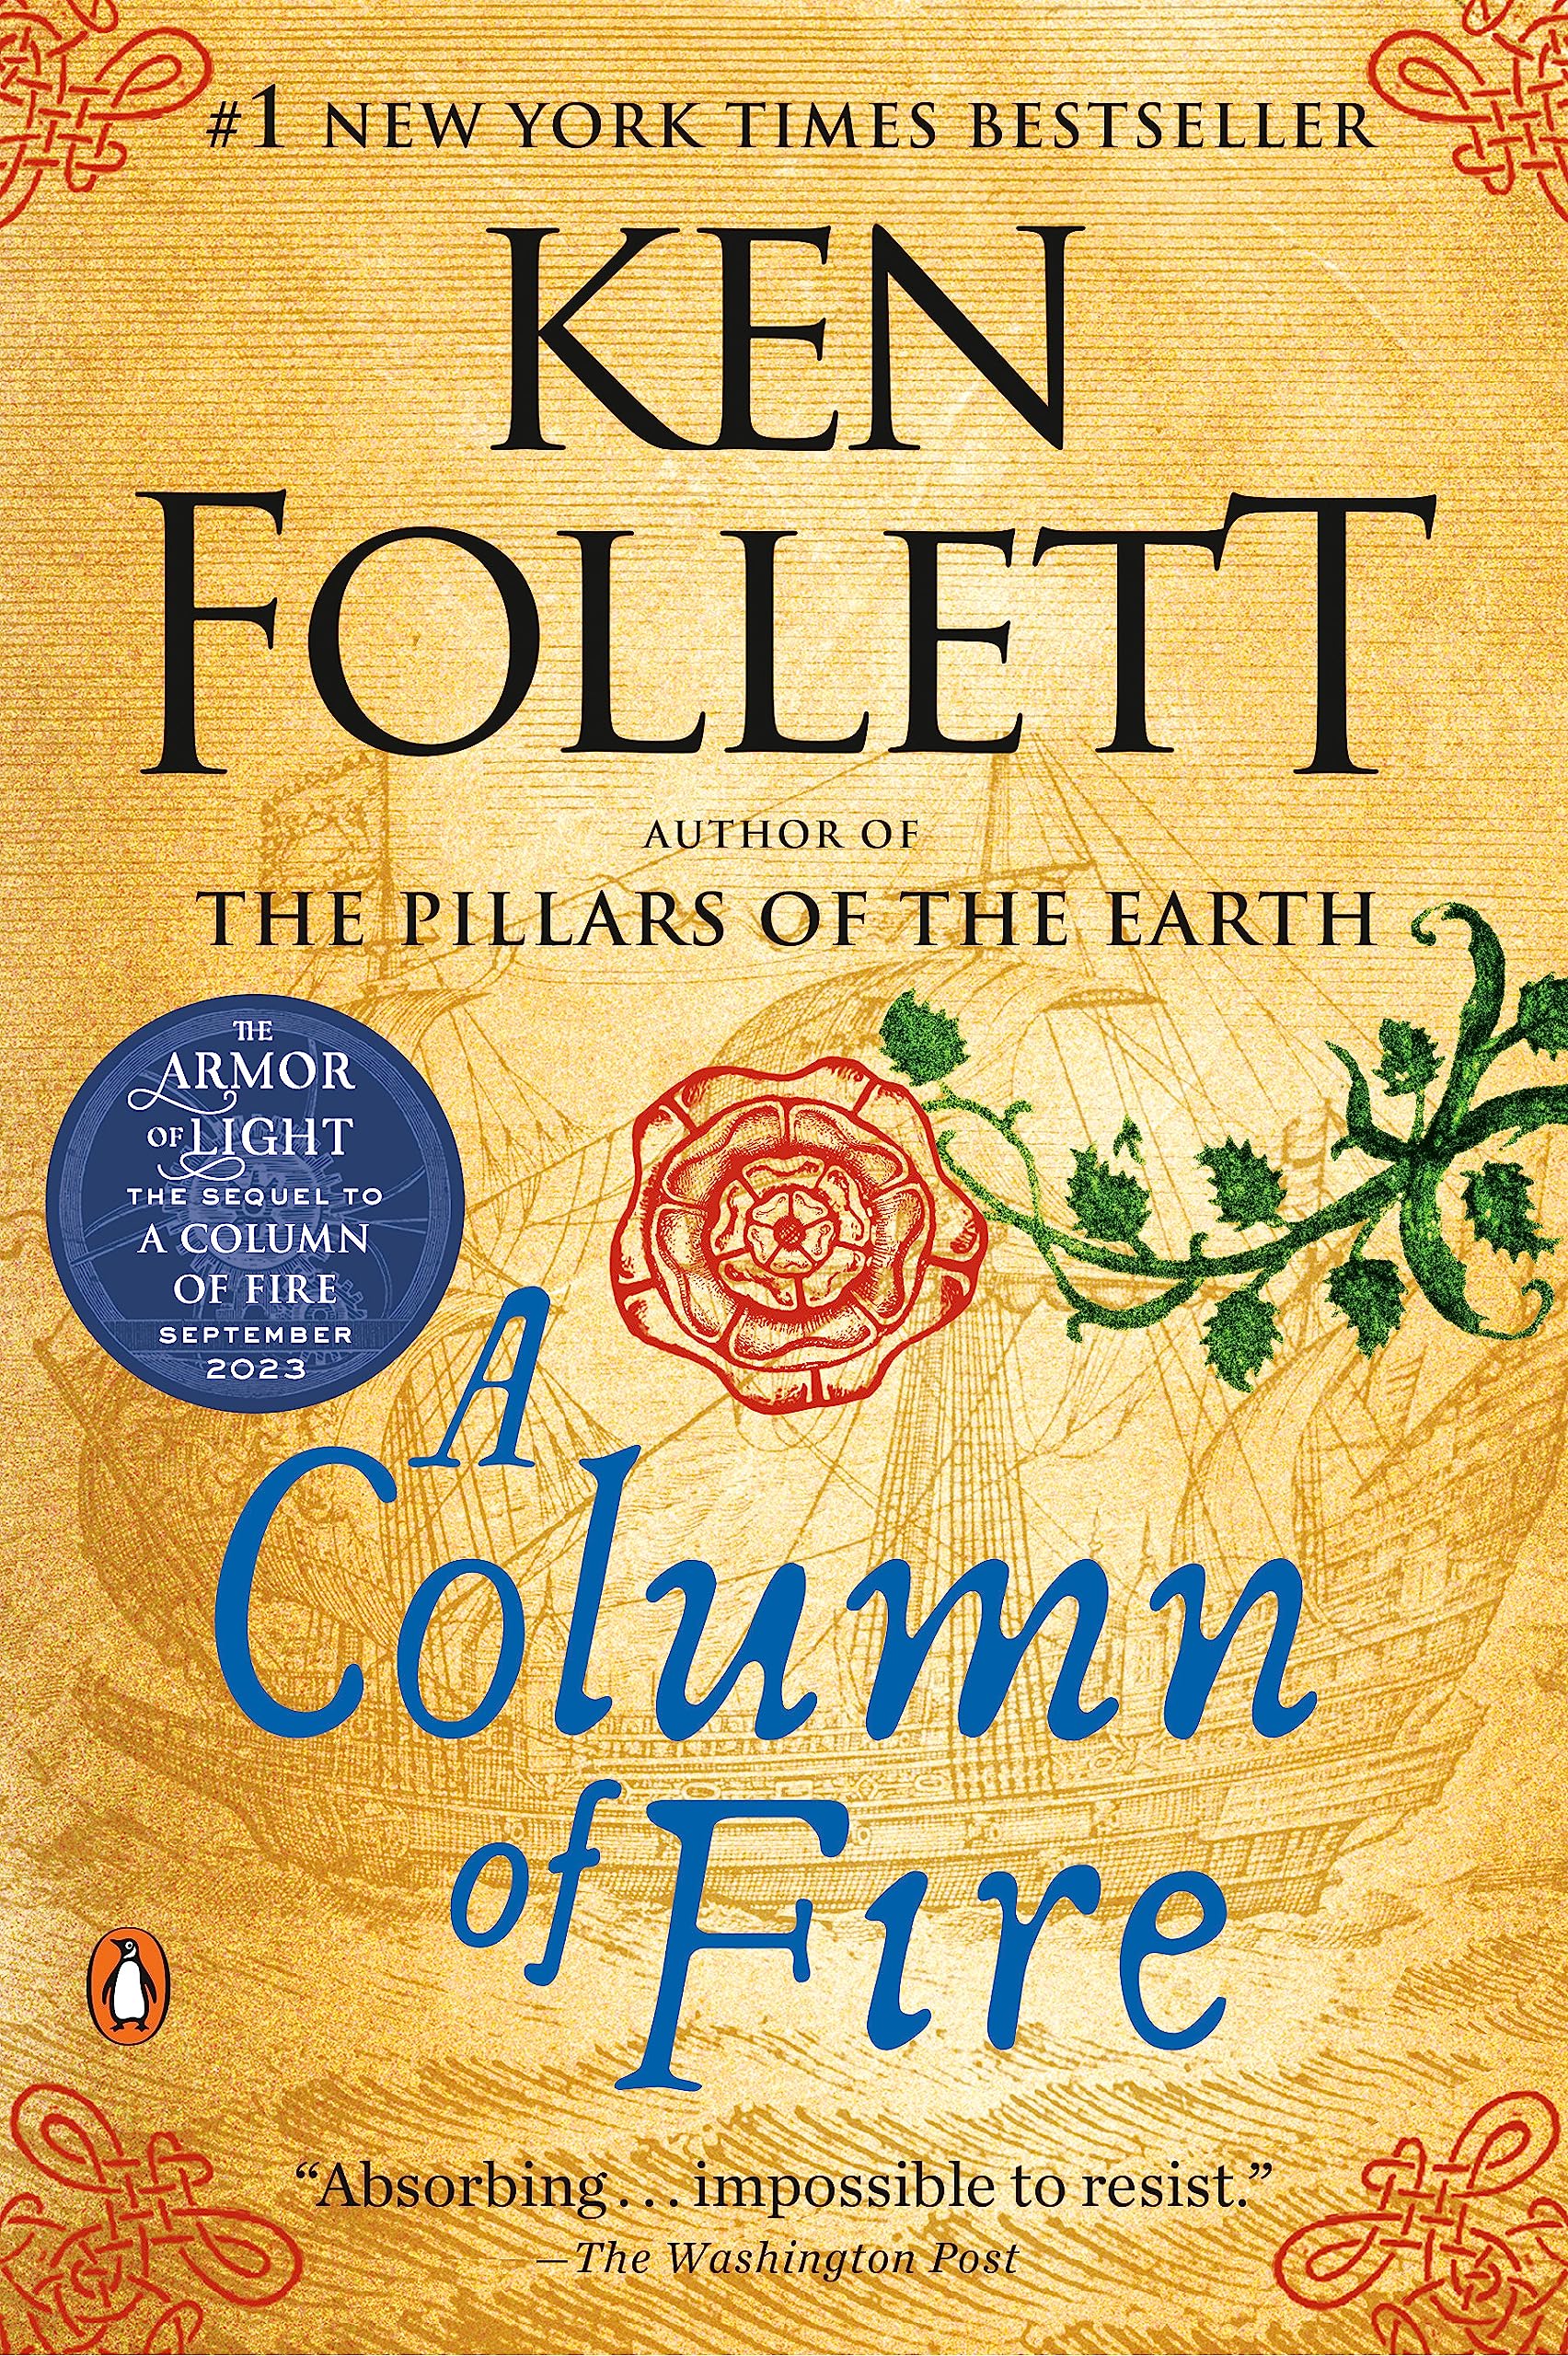 A Column of Fire: A Novel (Kingsbridge Book 3)